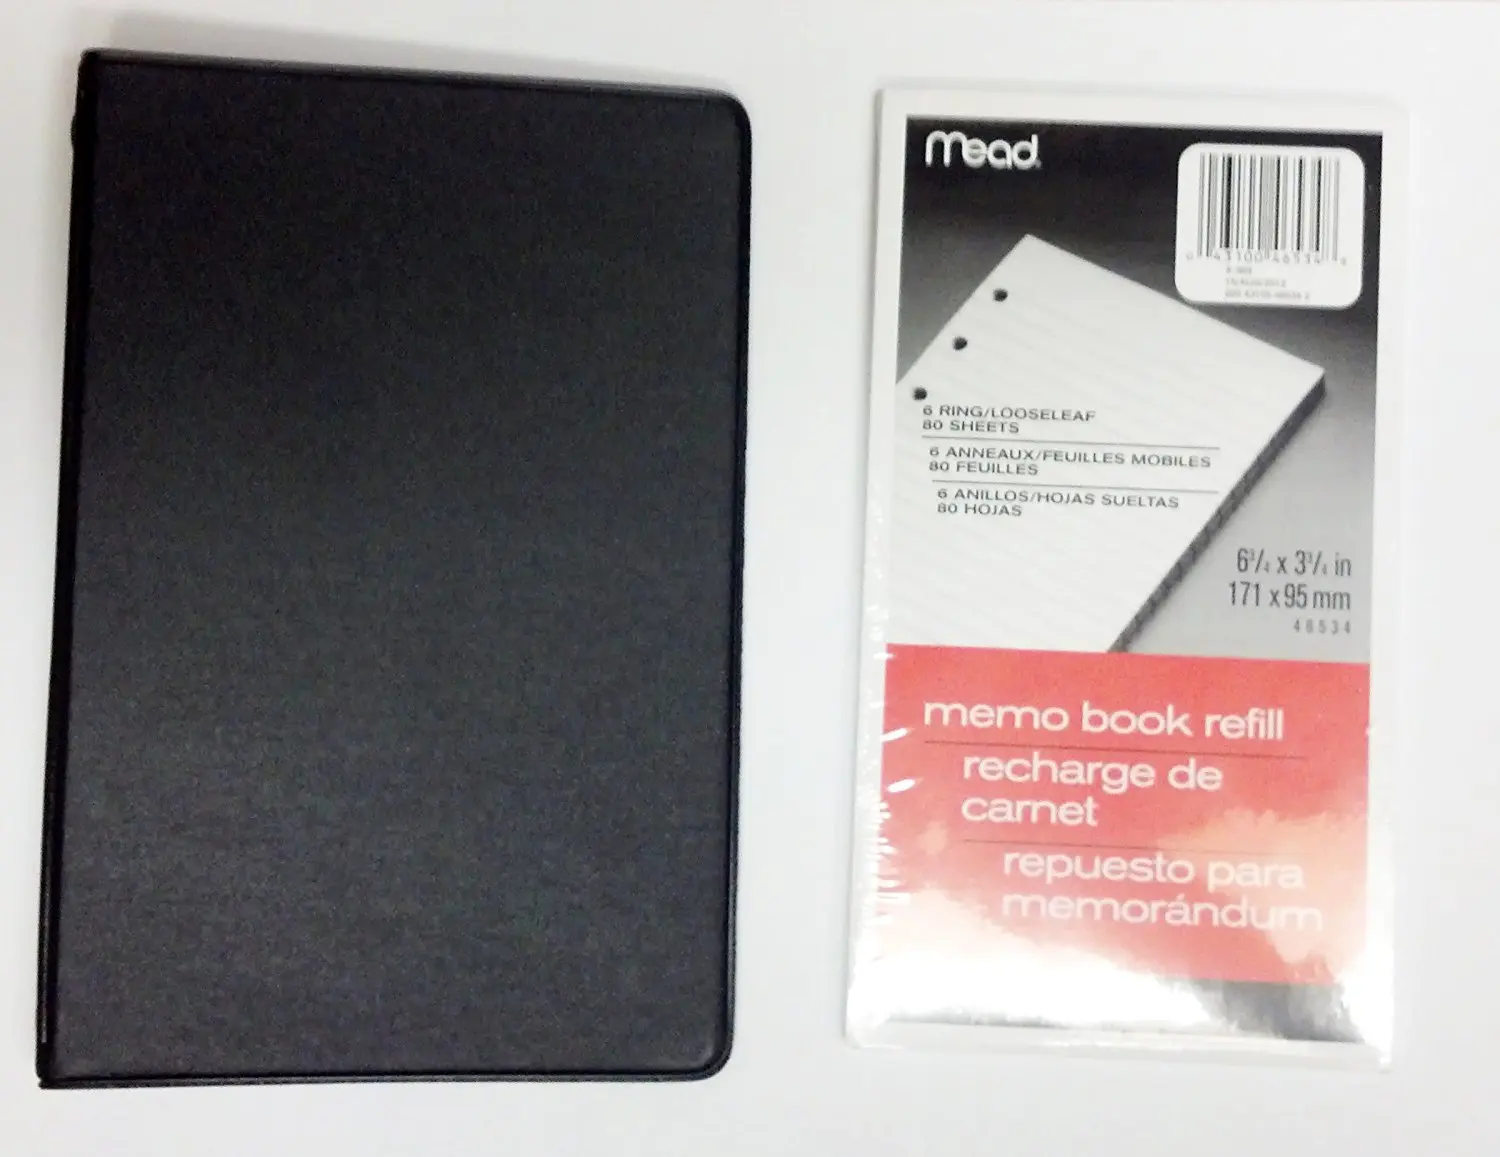 MEA46534 Mead Memo//Subject Notebooks